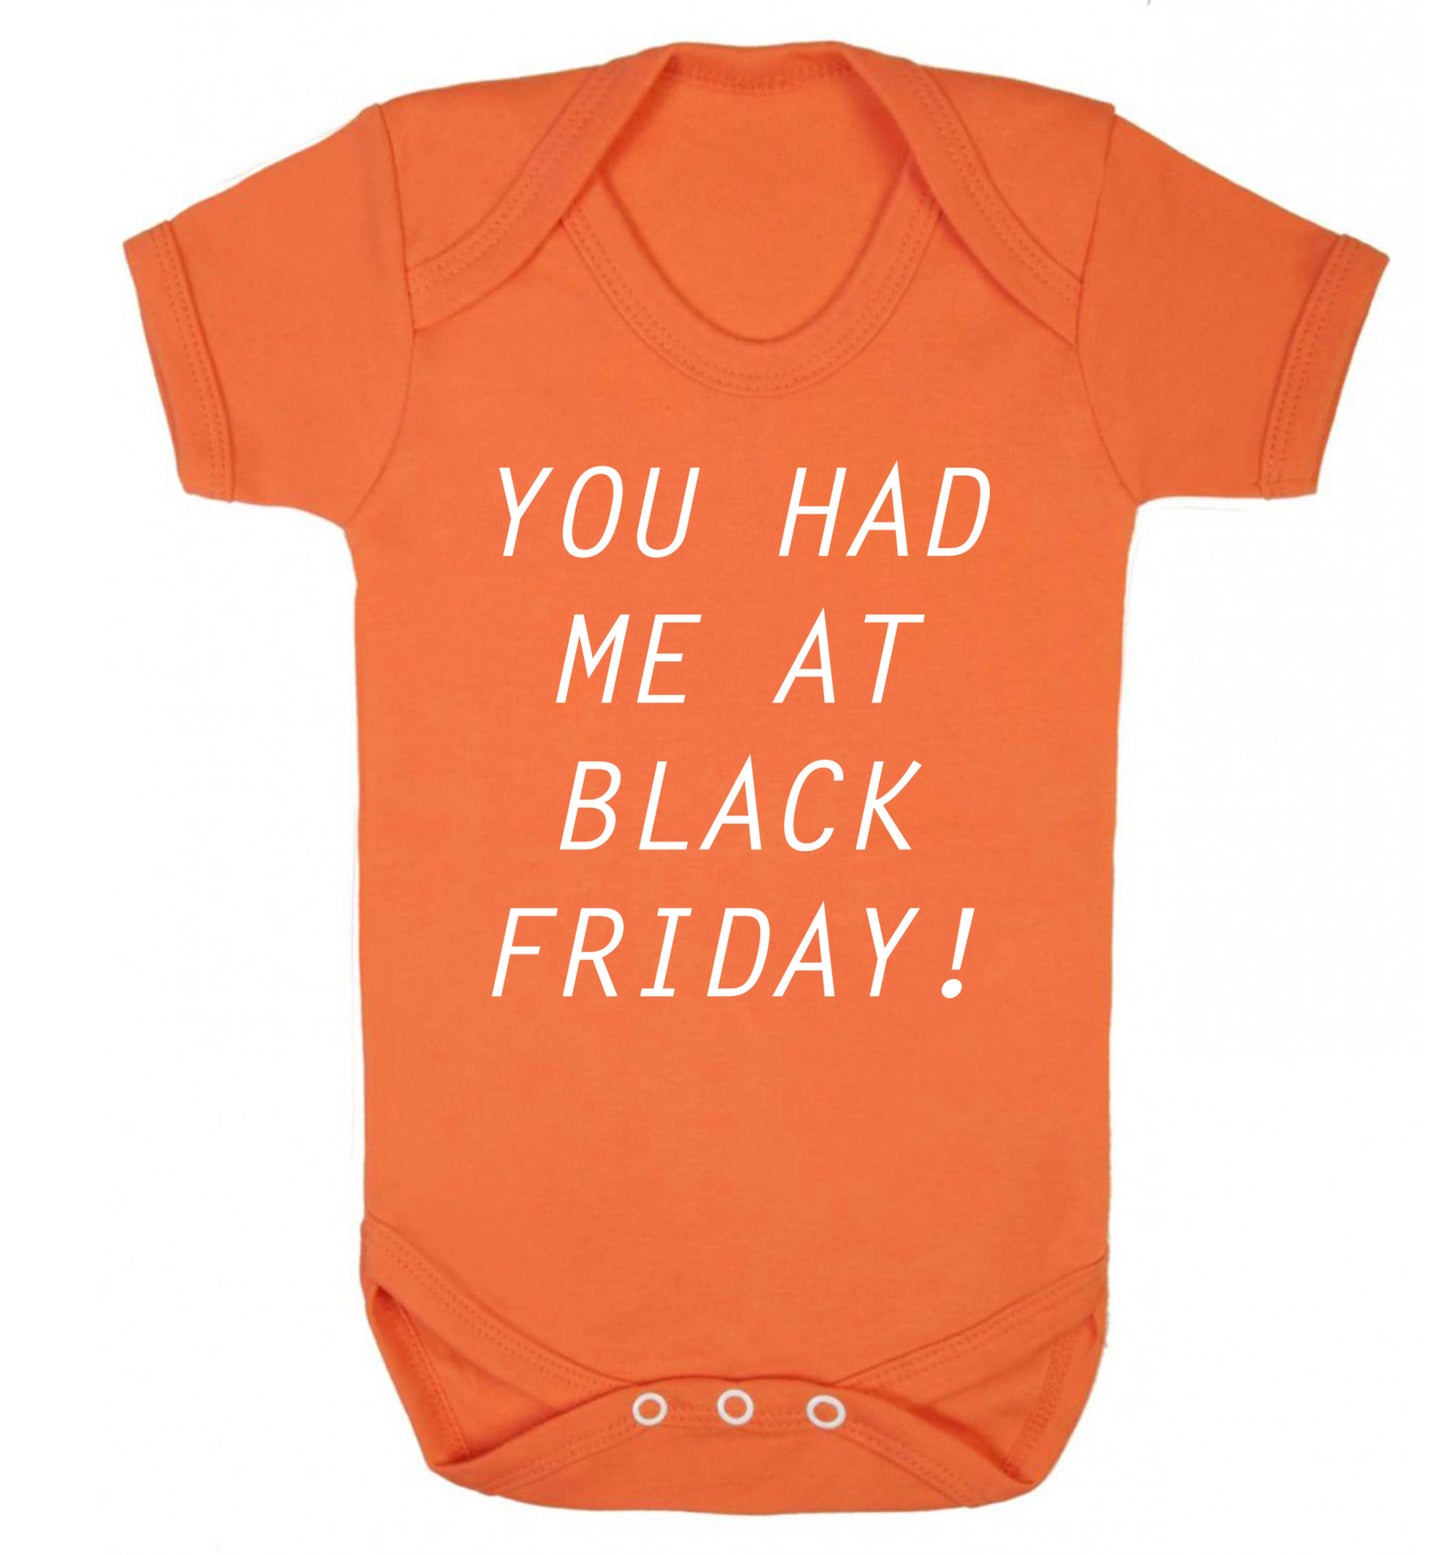 You had me at black friday Baby Vest orange 18-24 months